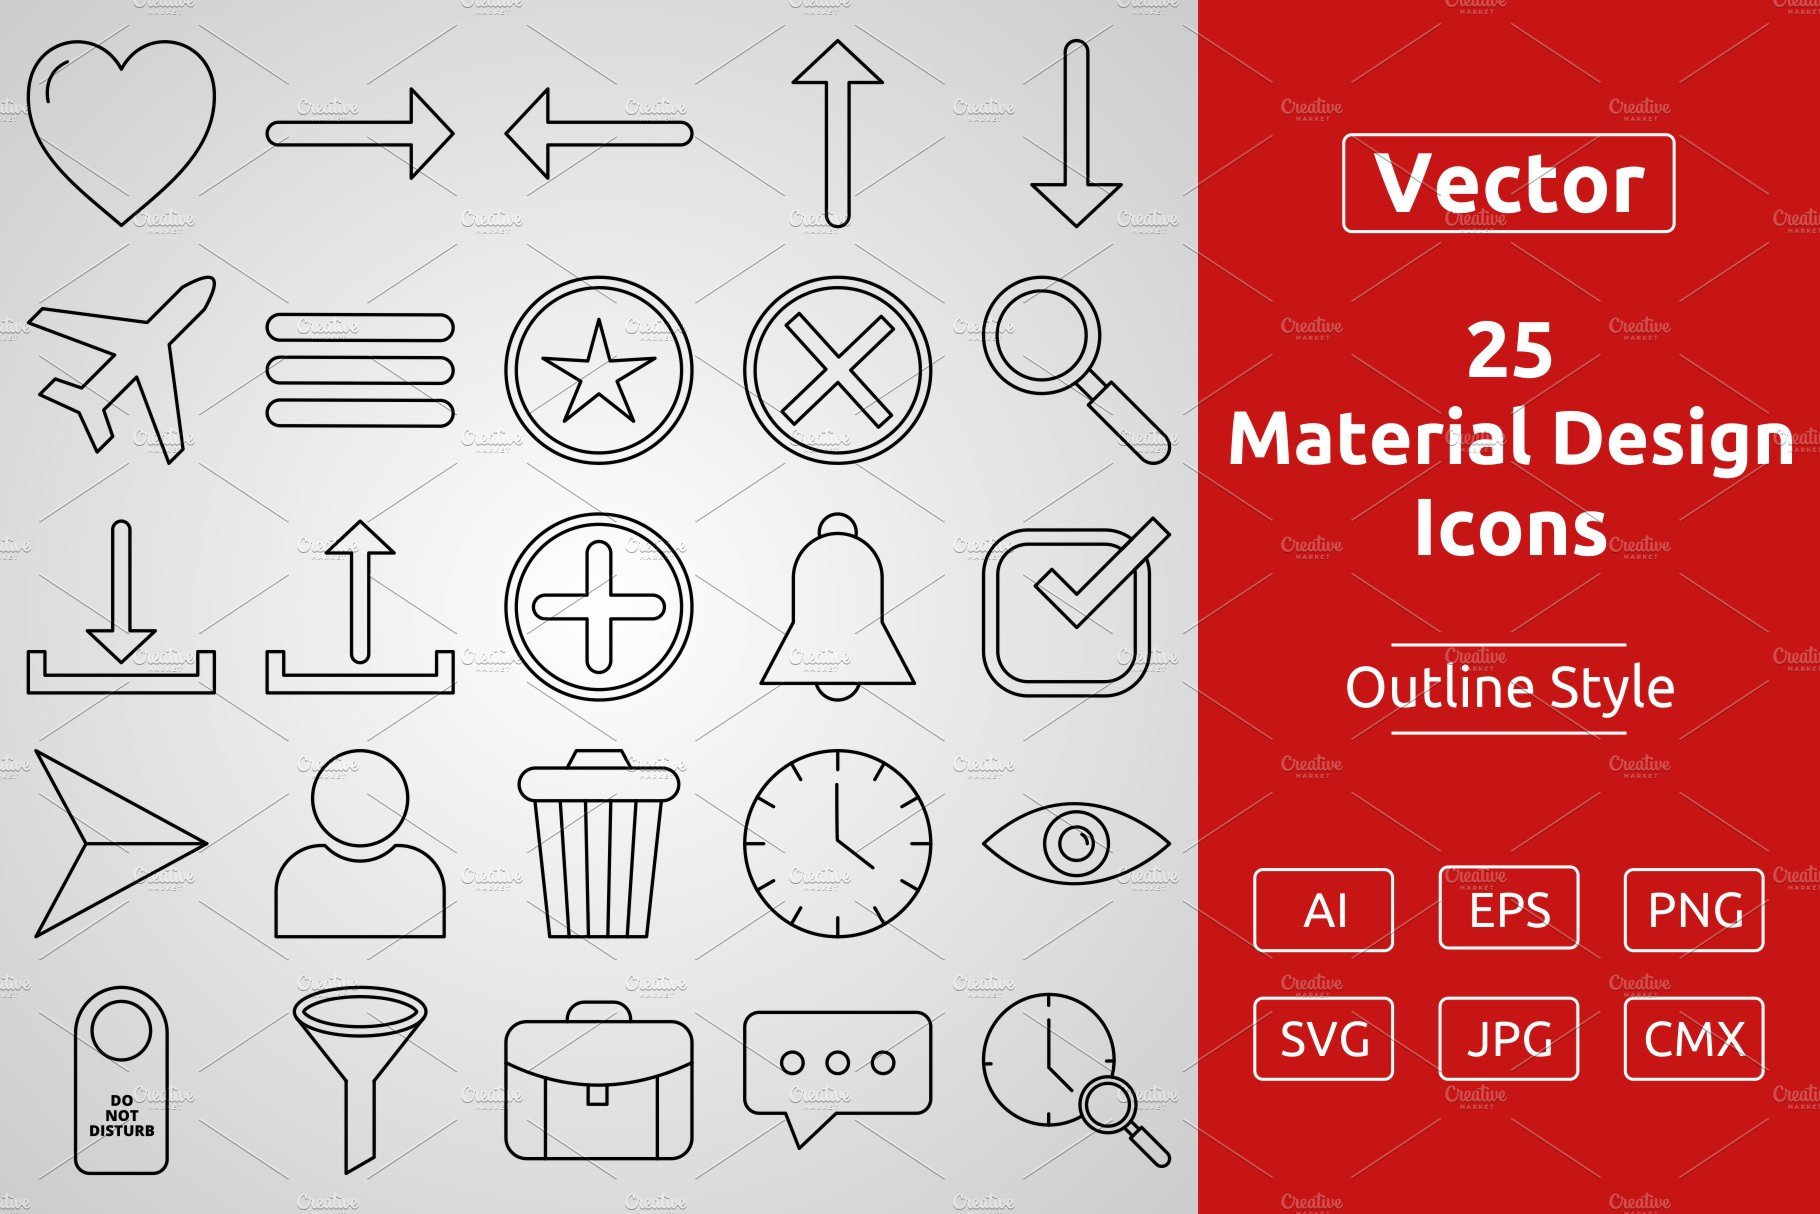 Icons – Material Design 3